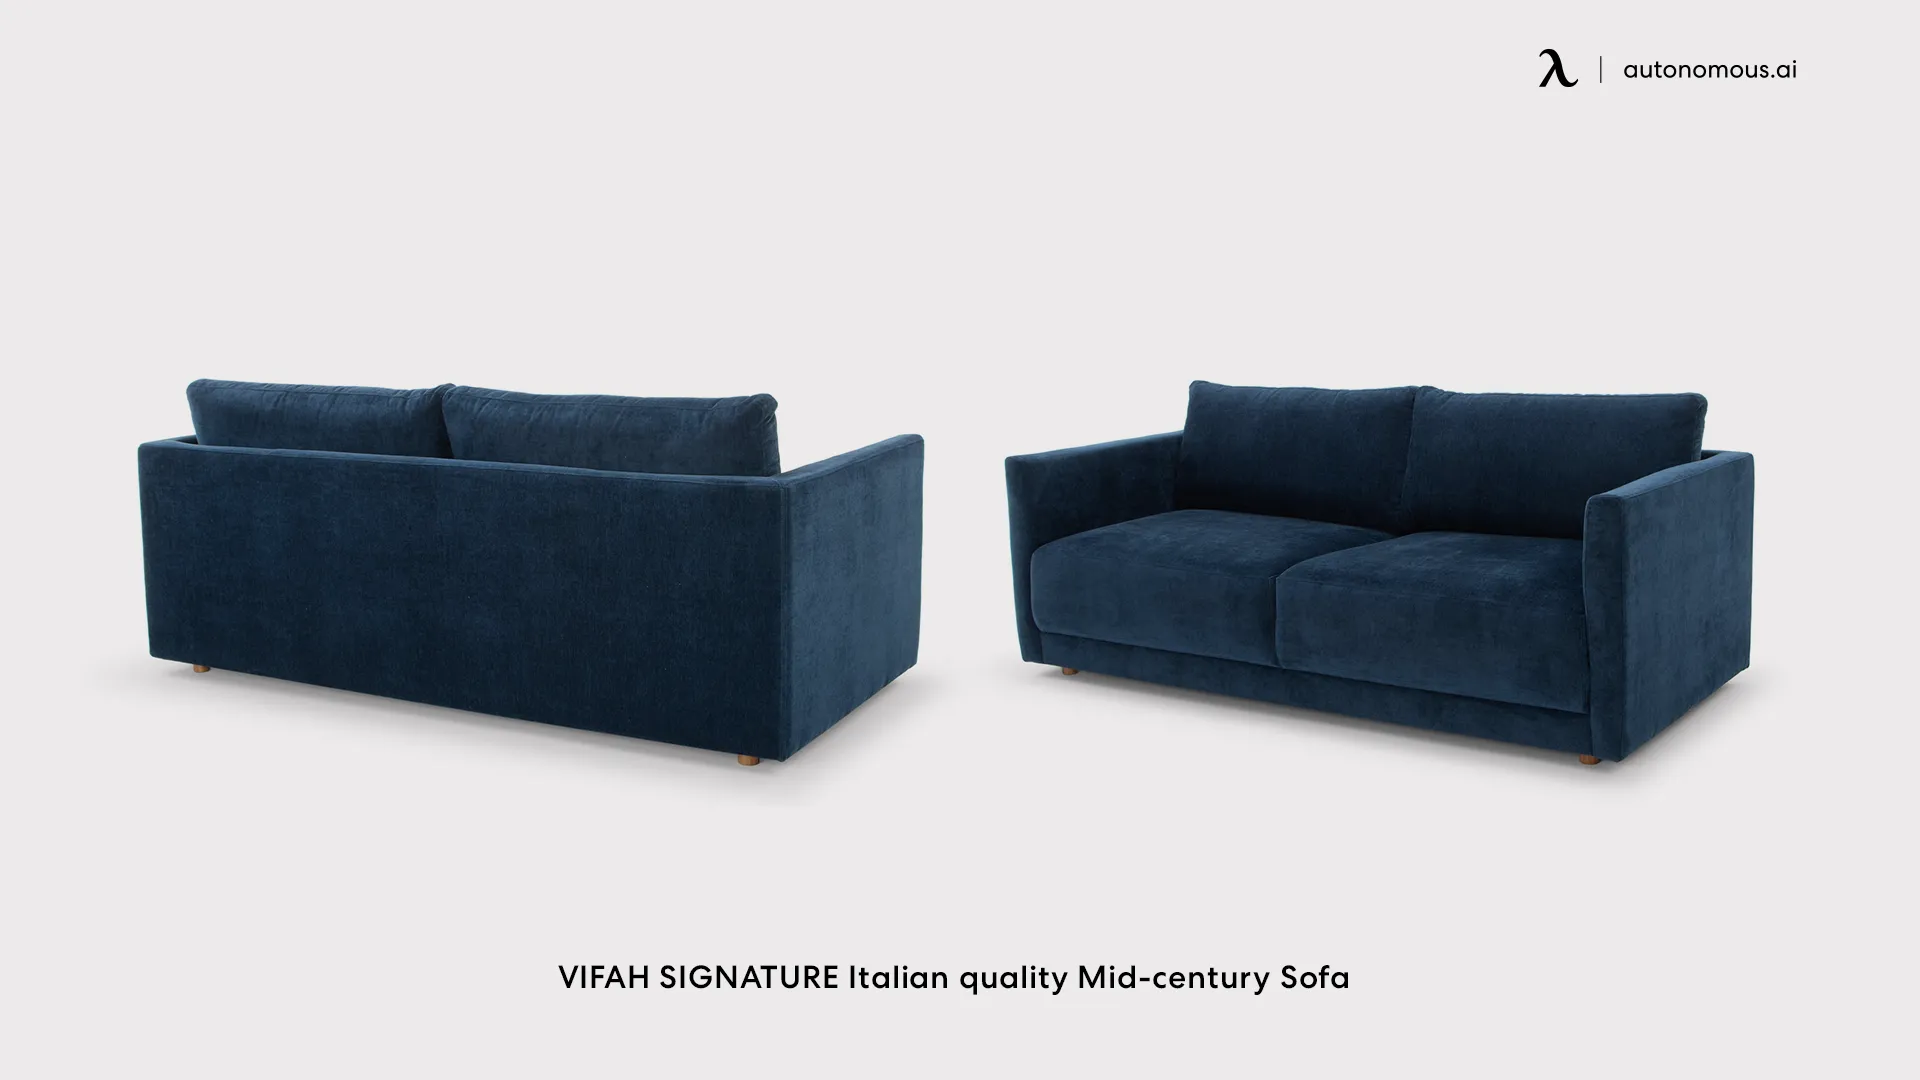 VIFAH SIGNATURE Italian quality Mid-century Sofa